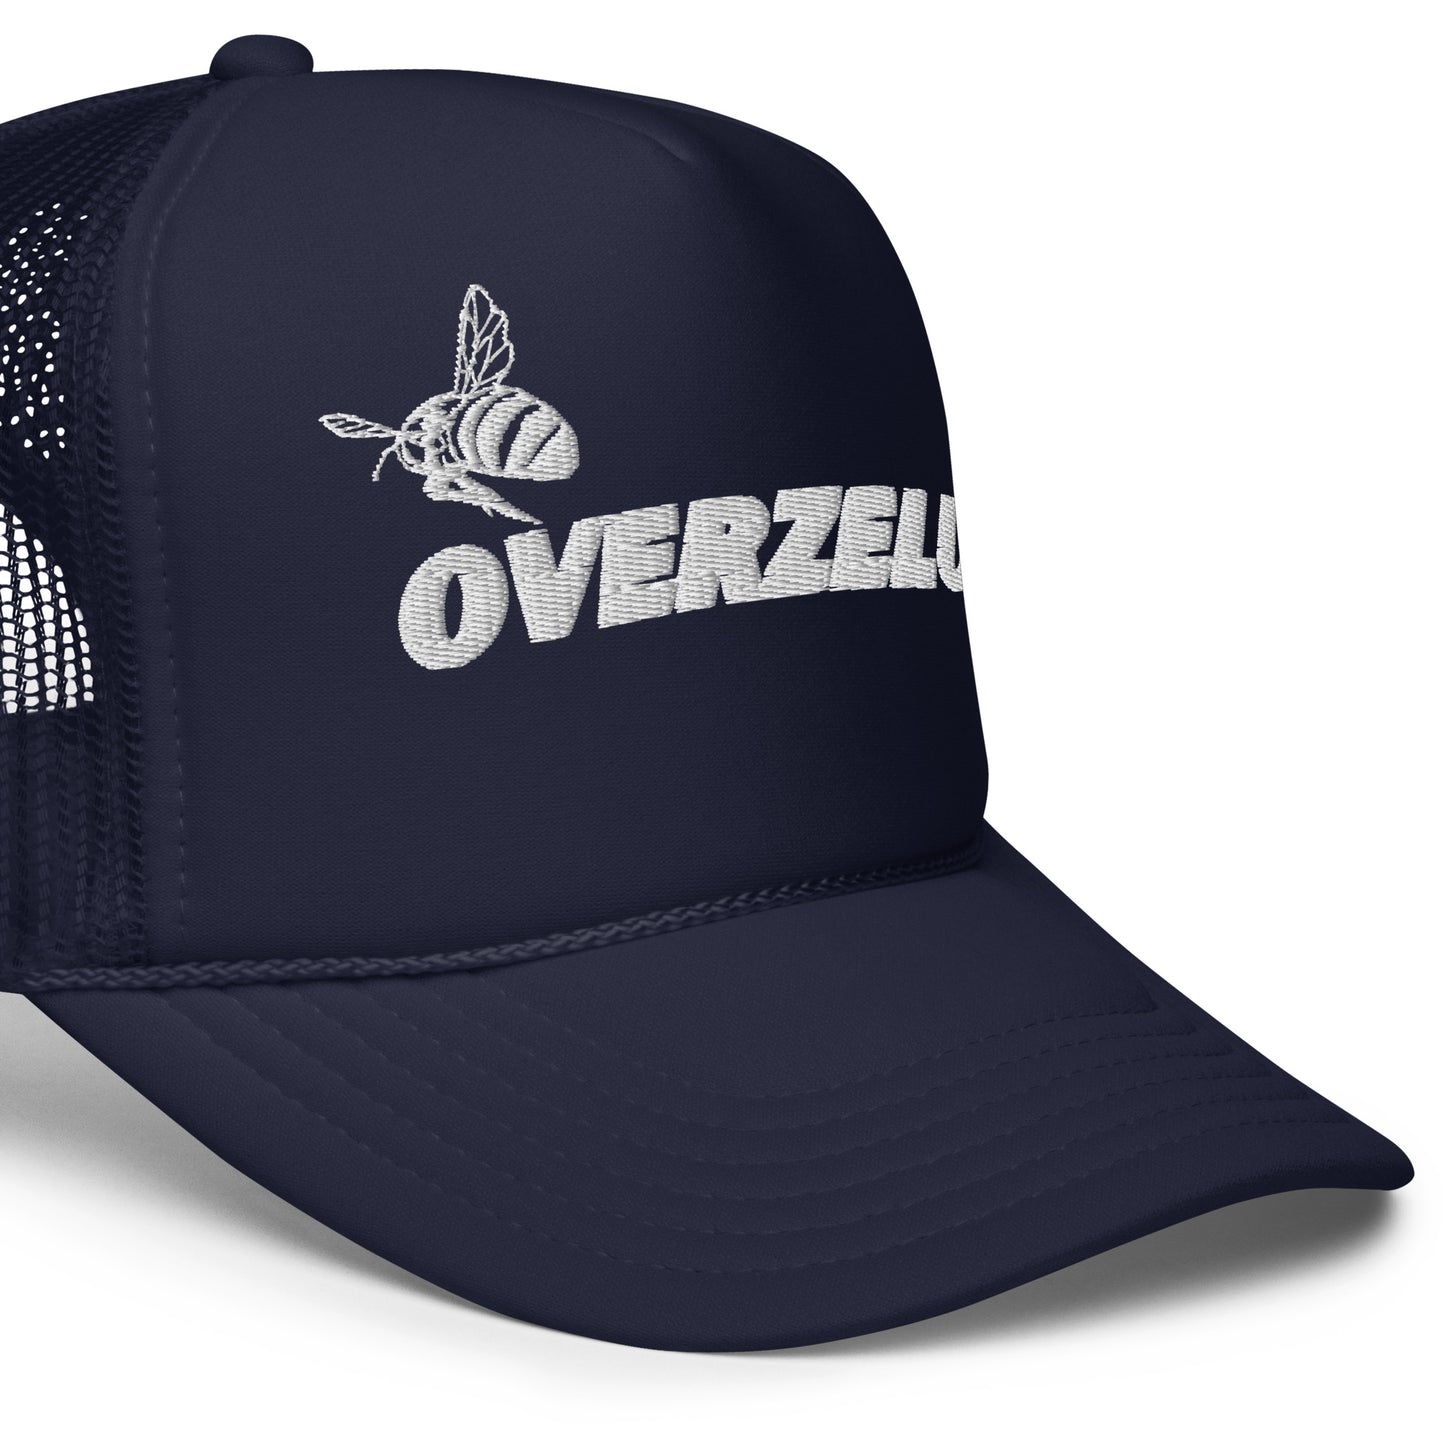 Embroidered Overzelus Trucker Hat